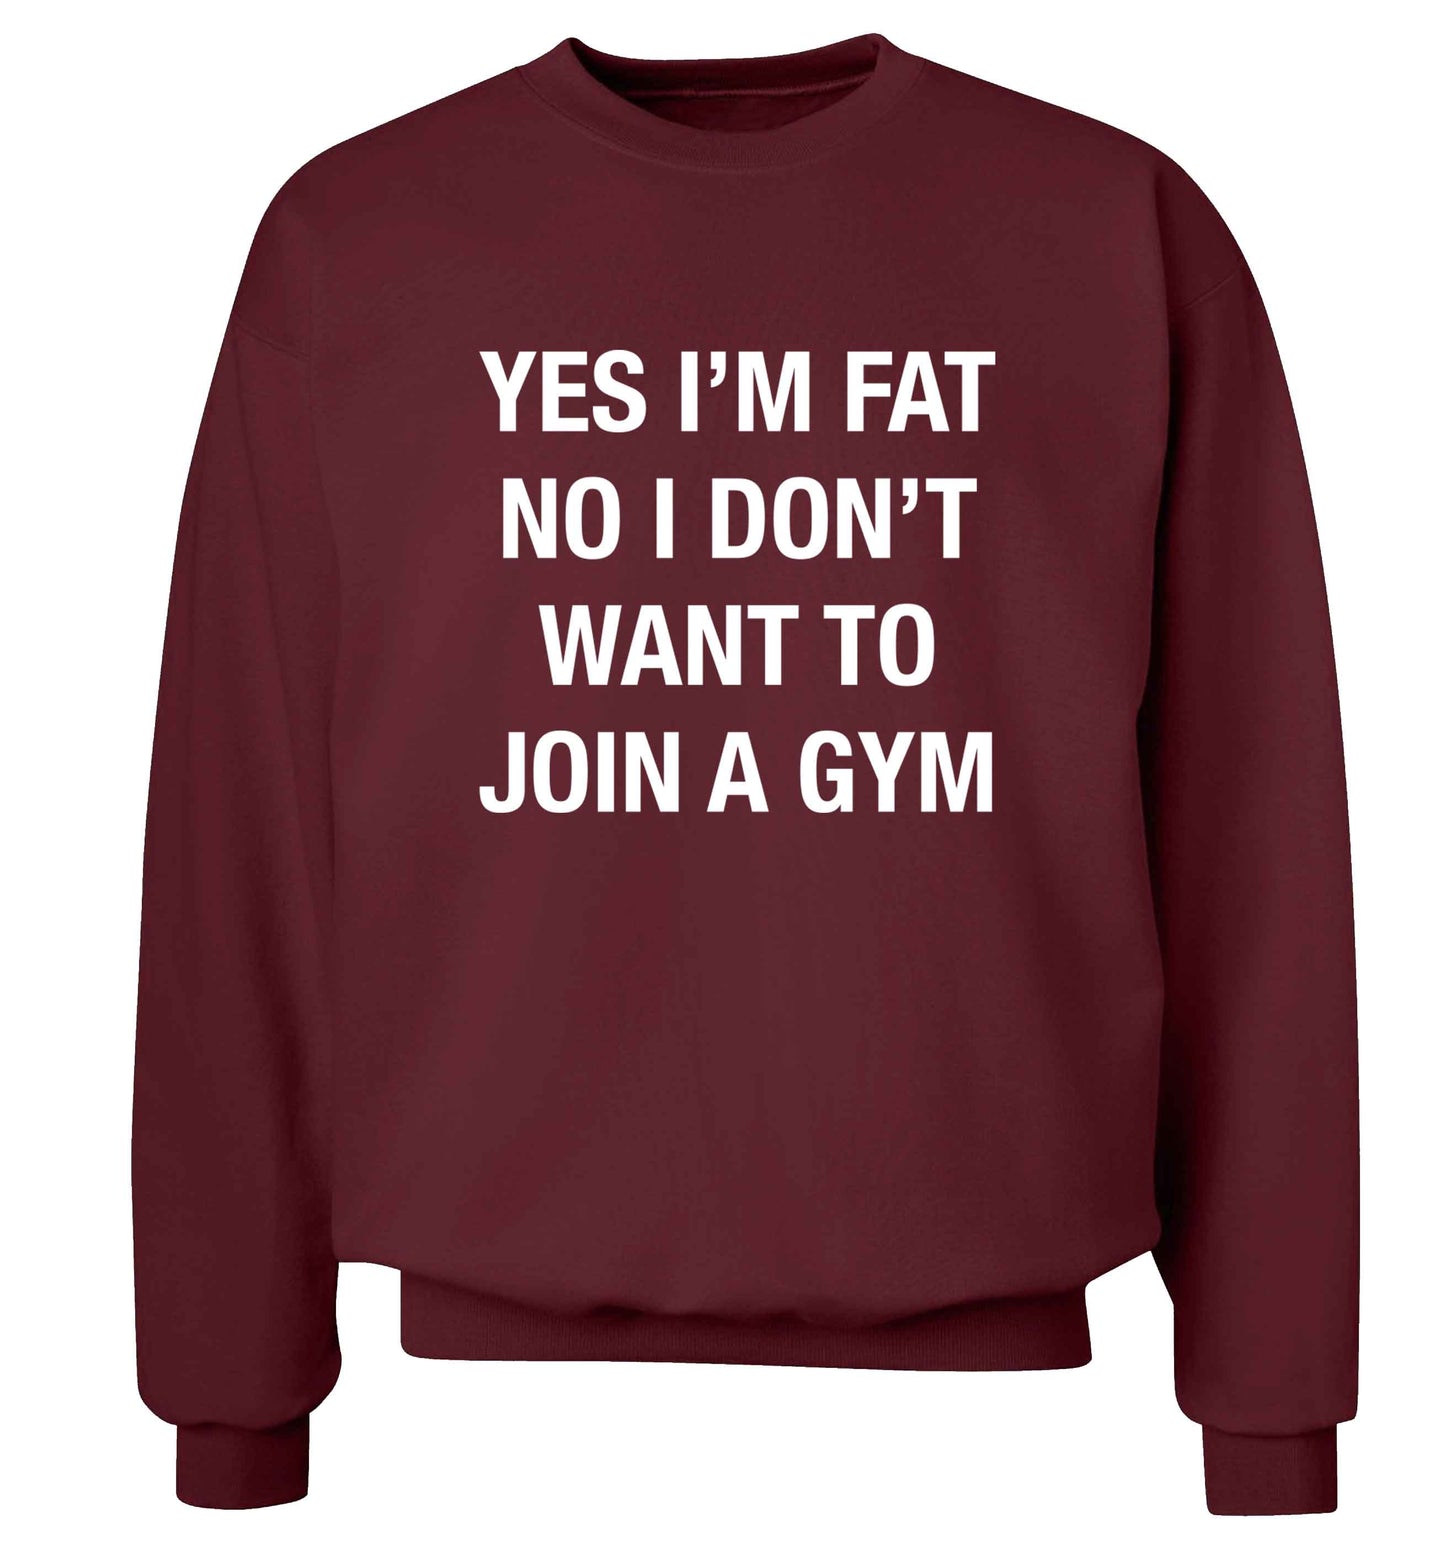 Yes I'm fat, no I don't want to go to the gym adult's unisex maroon sweater 2XL